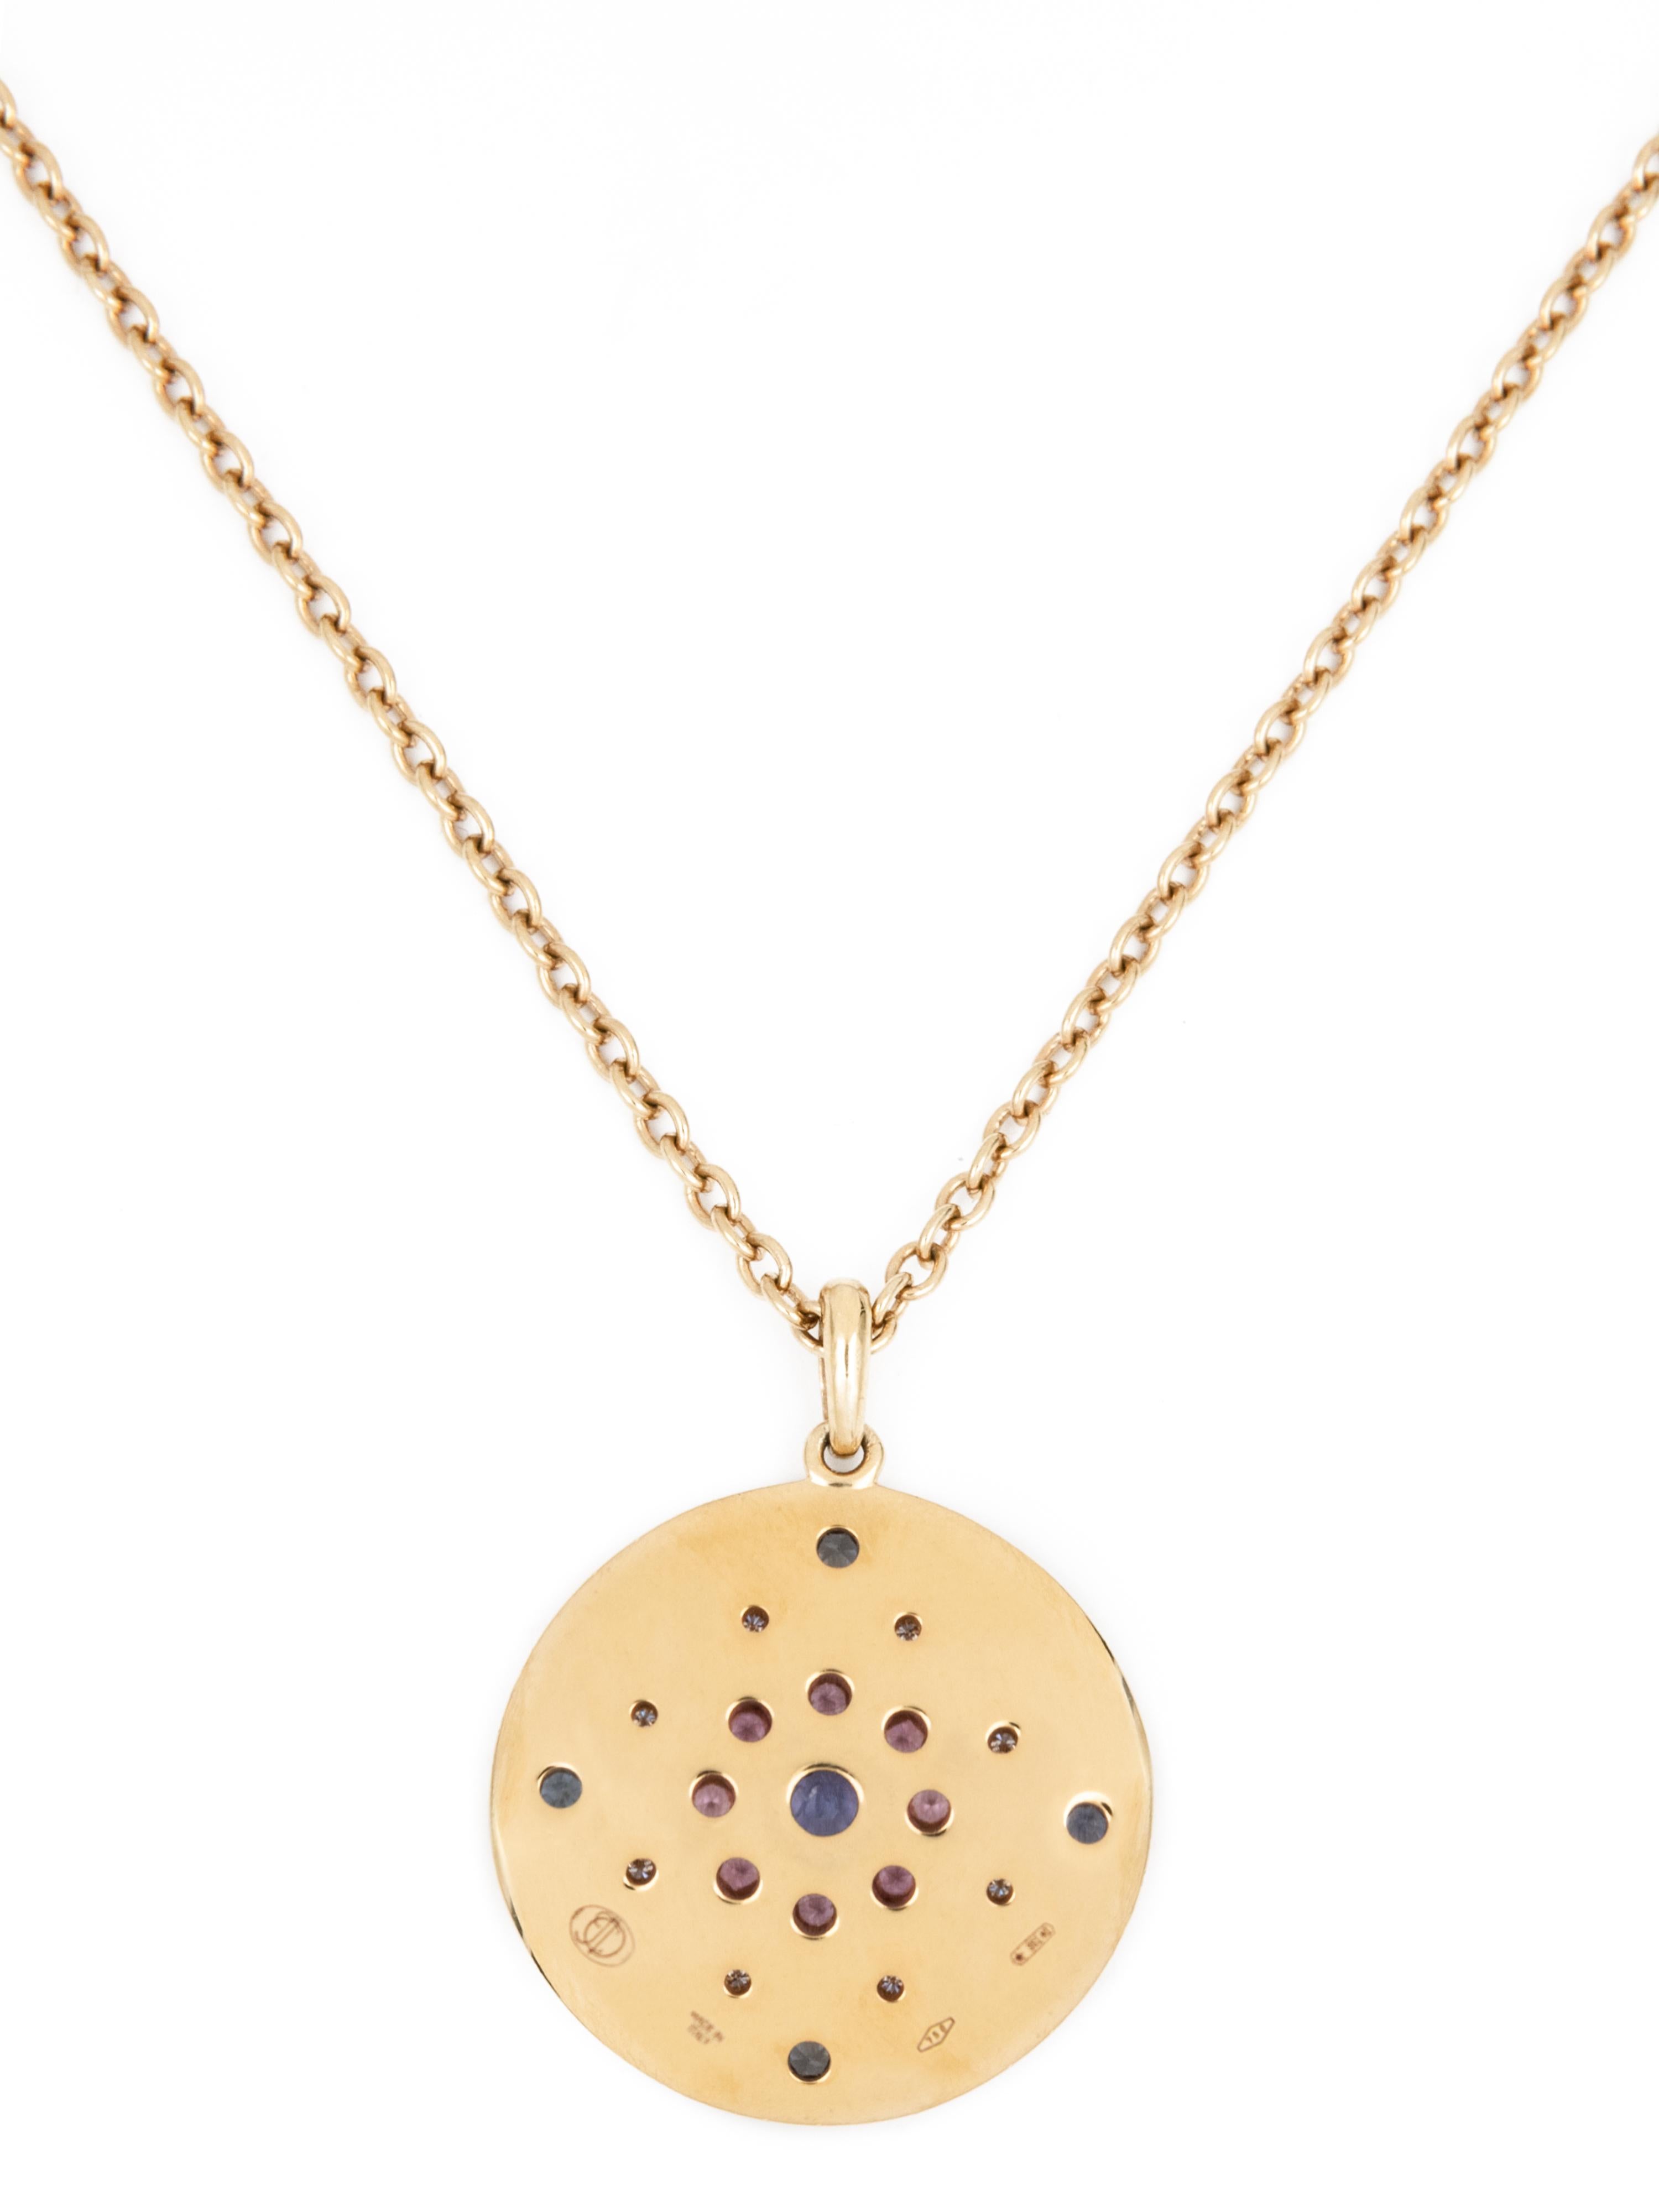 Julia-Didon Cayre 18 Karat Yellow Gold Diamond and Sapphire Necklace Long Chain (Zeitgenössisch)